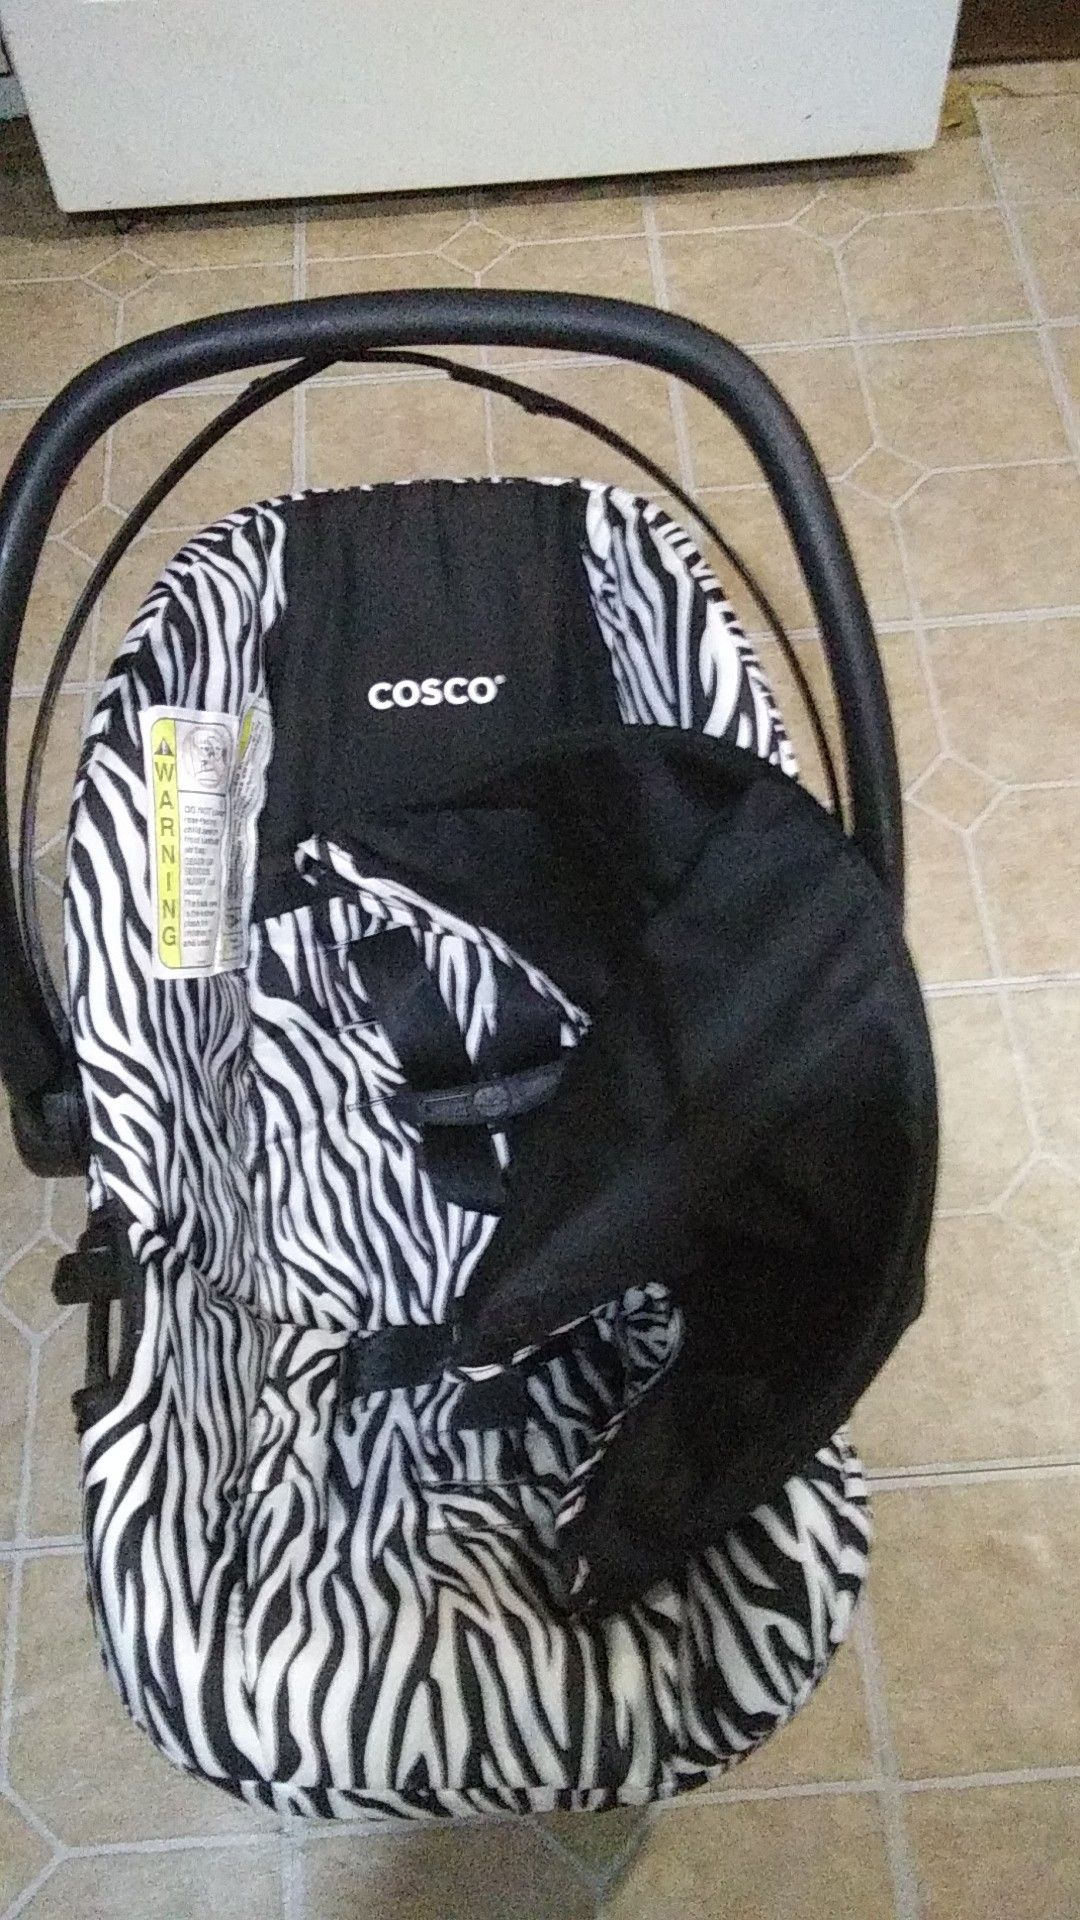 Clean Zebra print Greco infant carrier